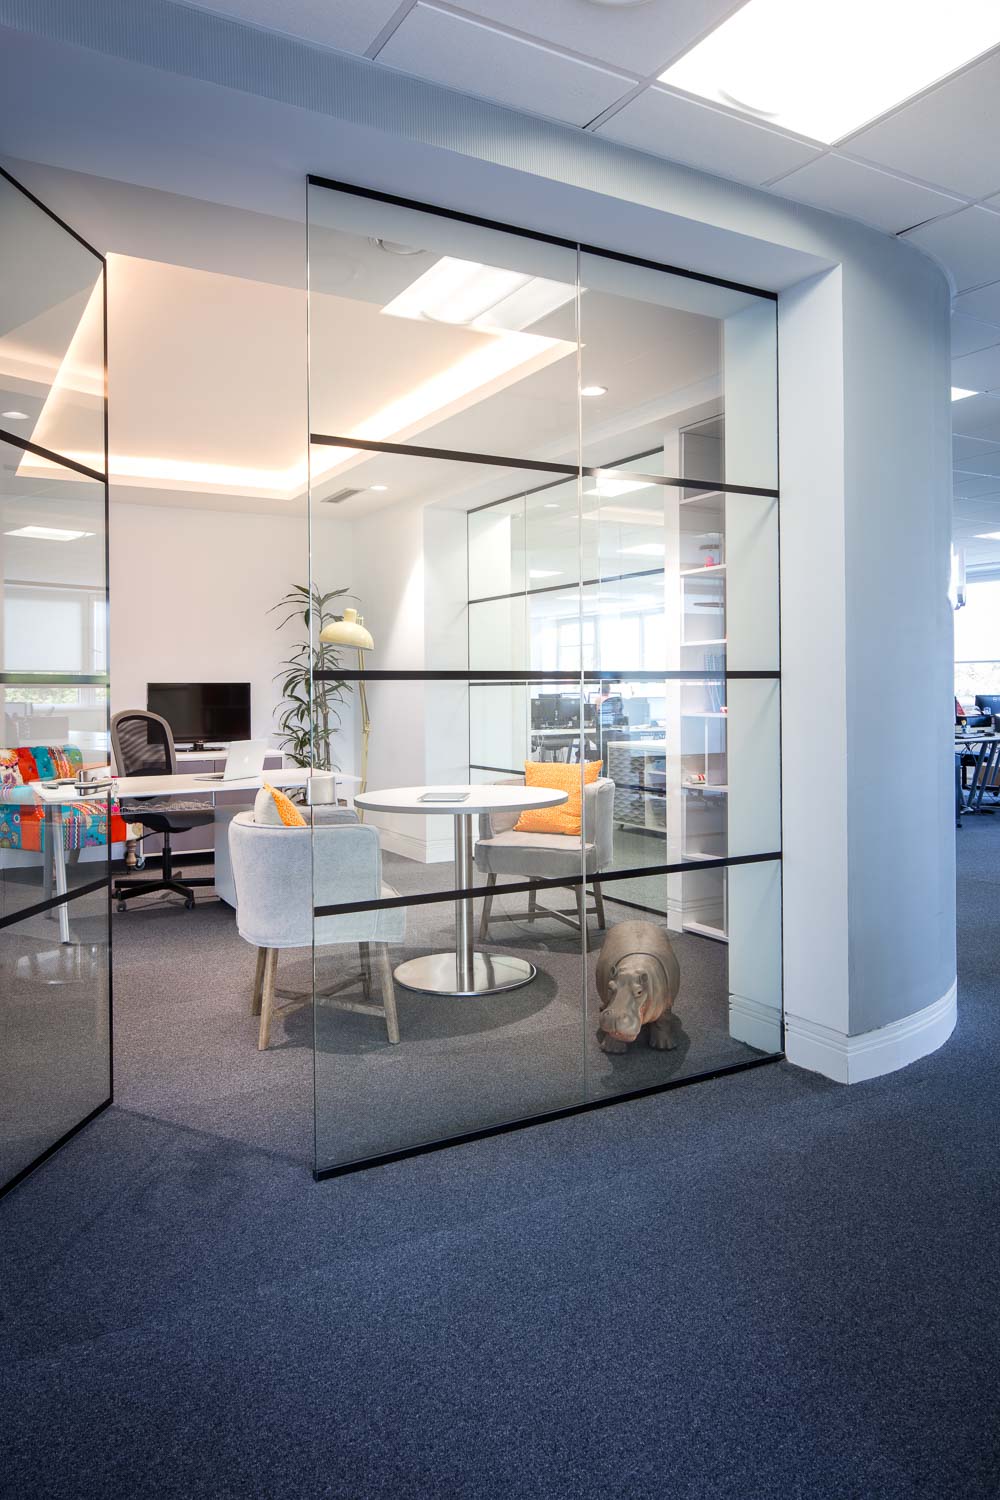 Office space of Just Eat headquarter in Dublin designed by Dublin Design Studio